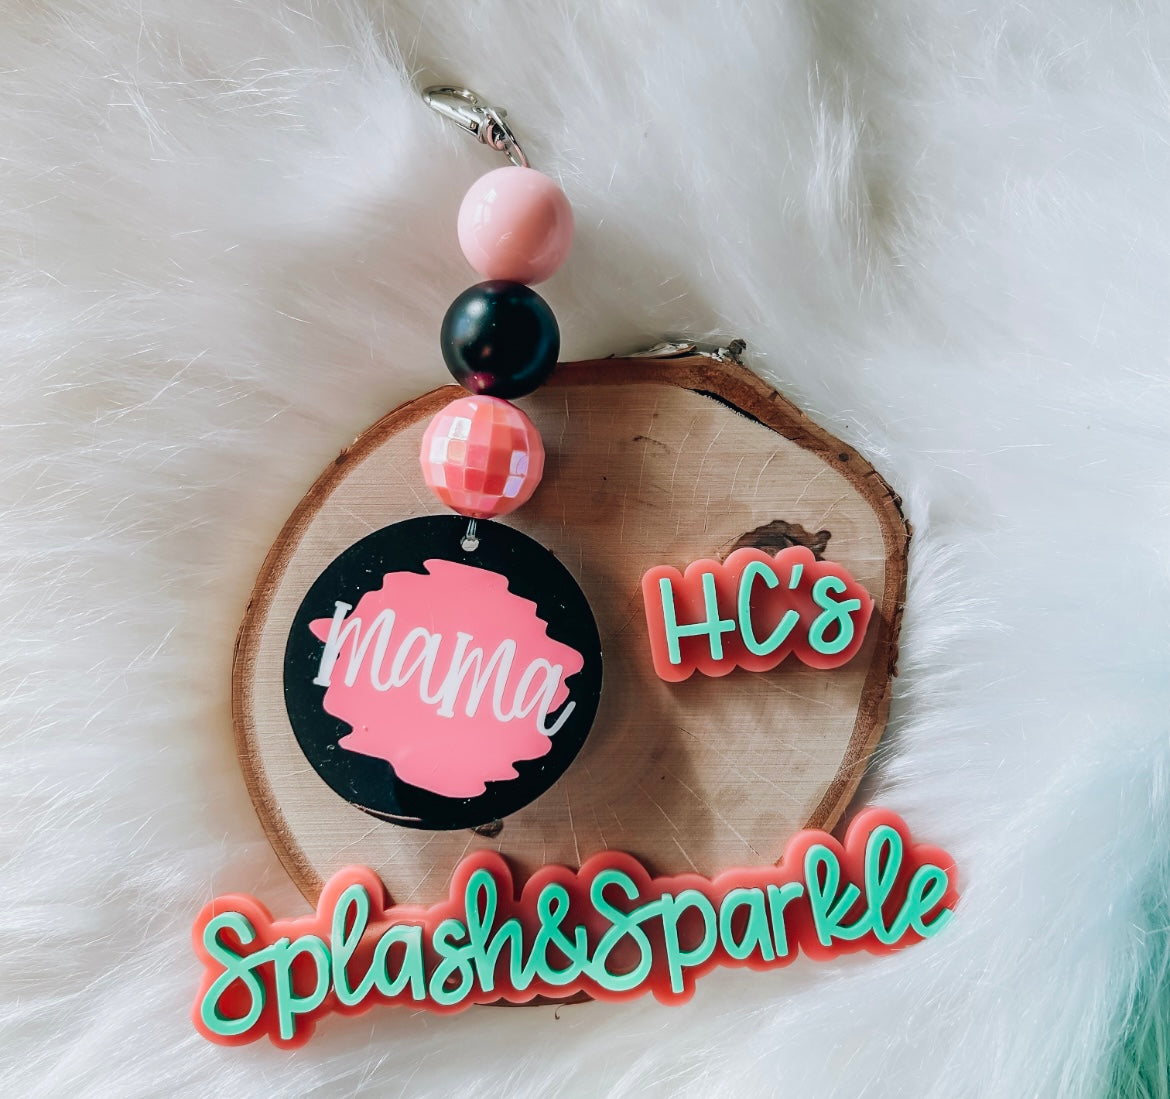 Badge reels – HC's Splash & Sparkle